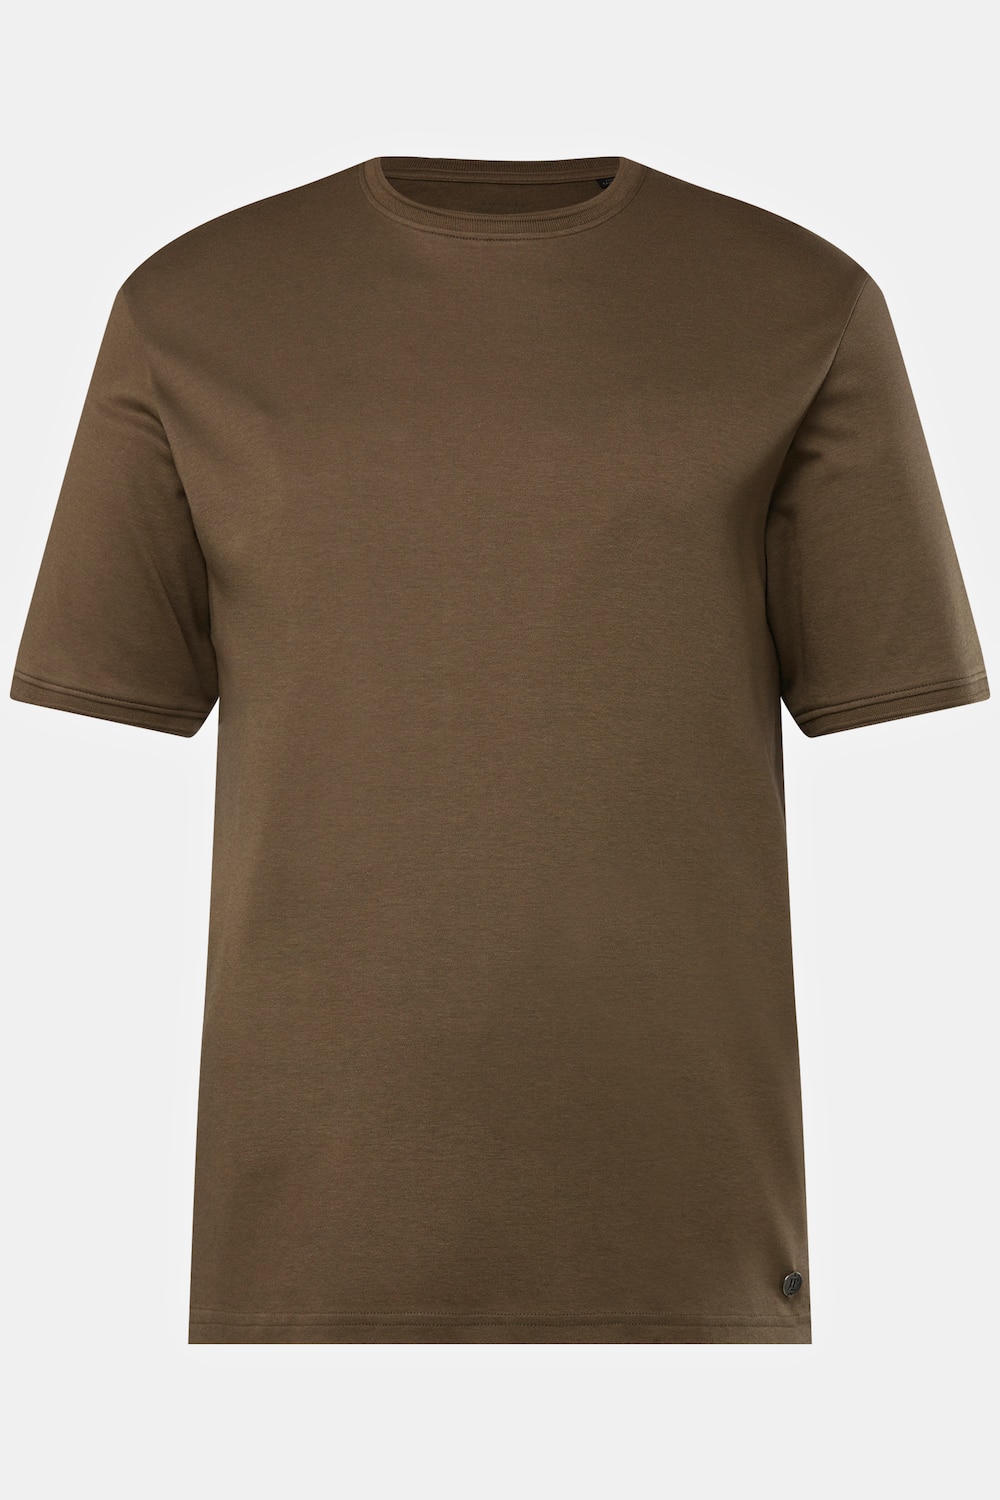 Grote Maten T-shirt, Heren, bruin, Maat: 3XL, Katoen/Viscose, JP1880